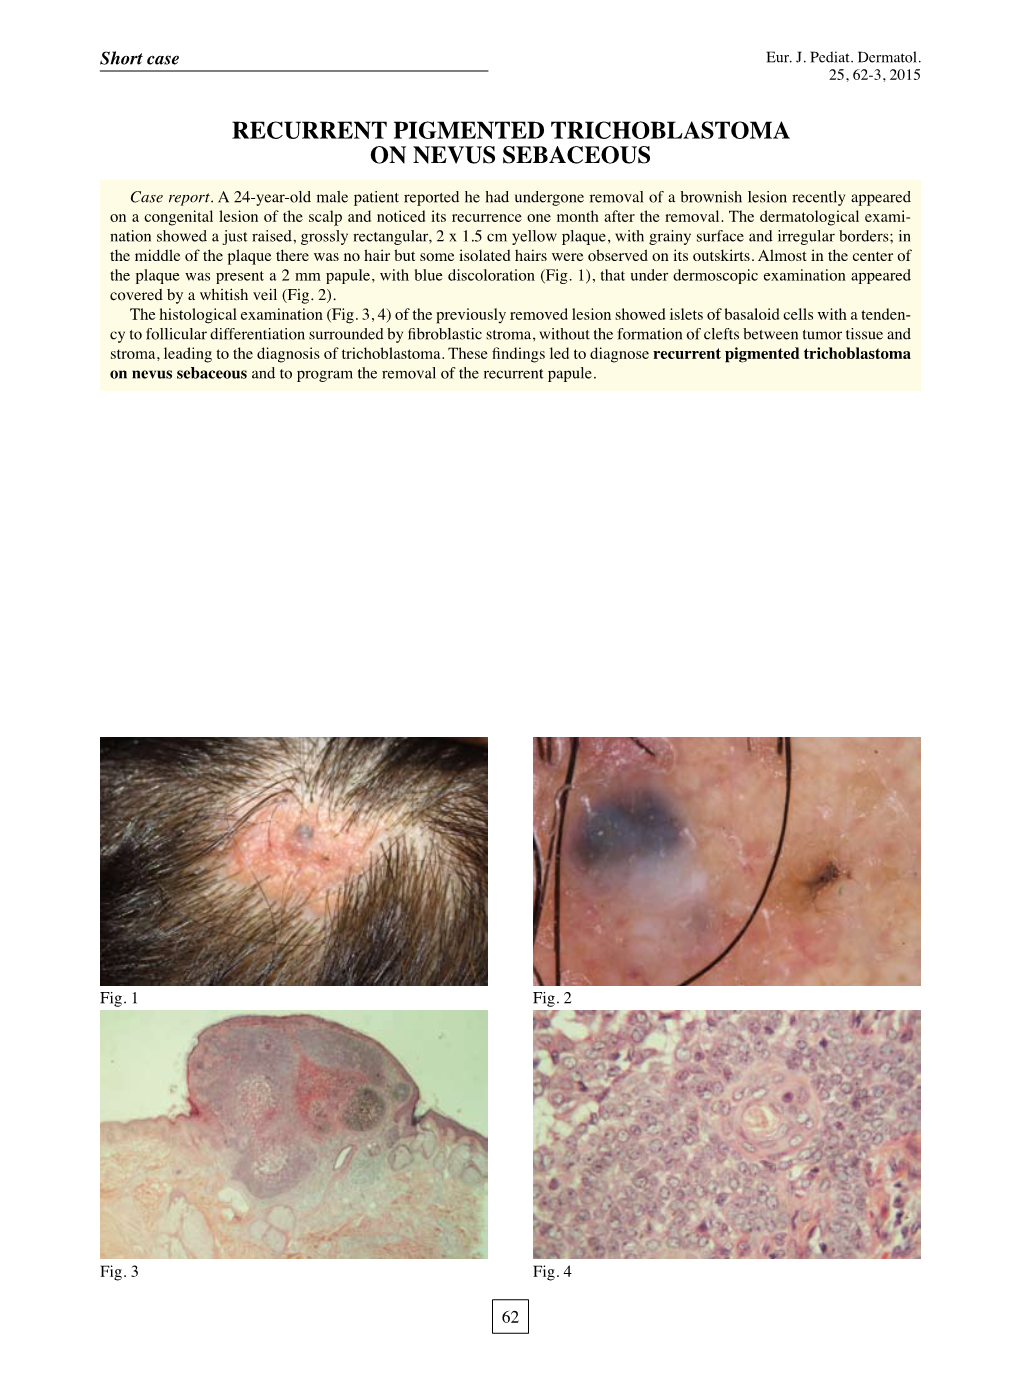 Recurrent Pigmented Trichoblastoma on Nevus Sebaceous